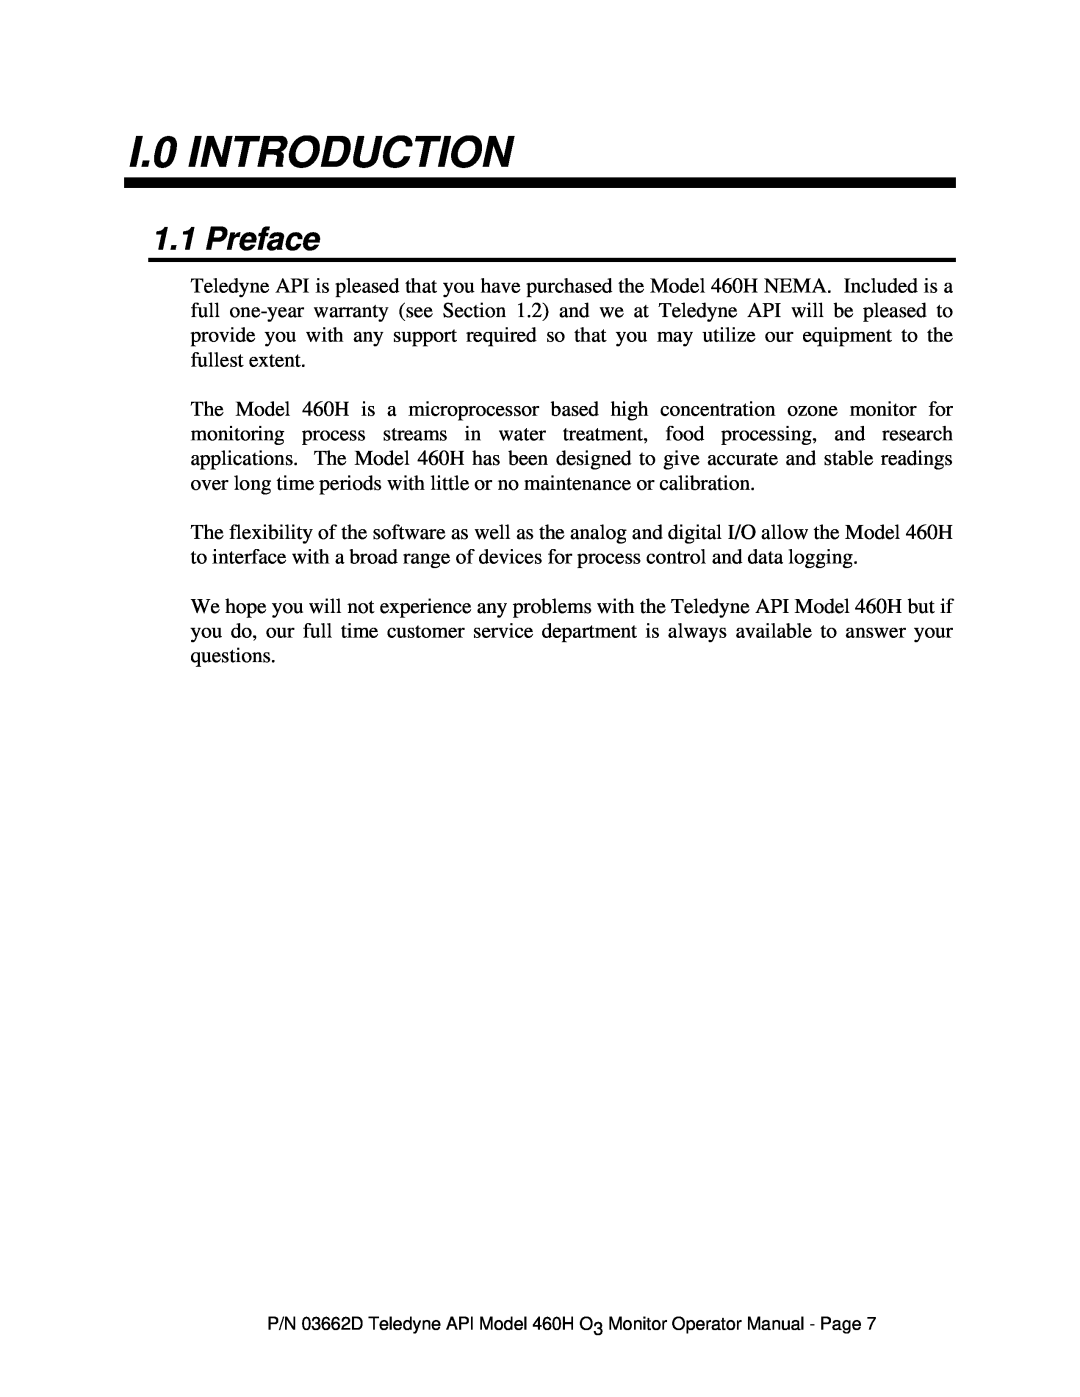 Teledyne 460H instruction manual I.0 INTRODUCTION, Preface 